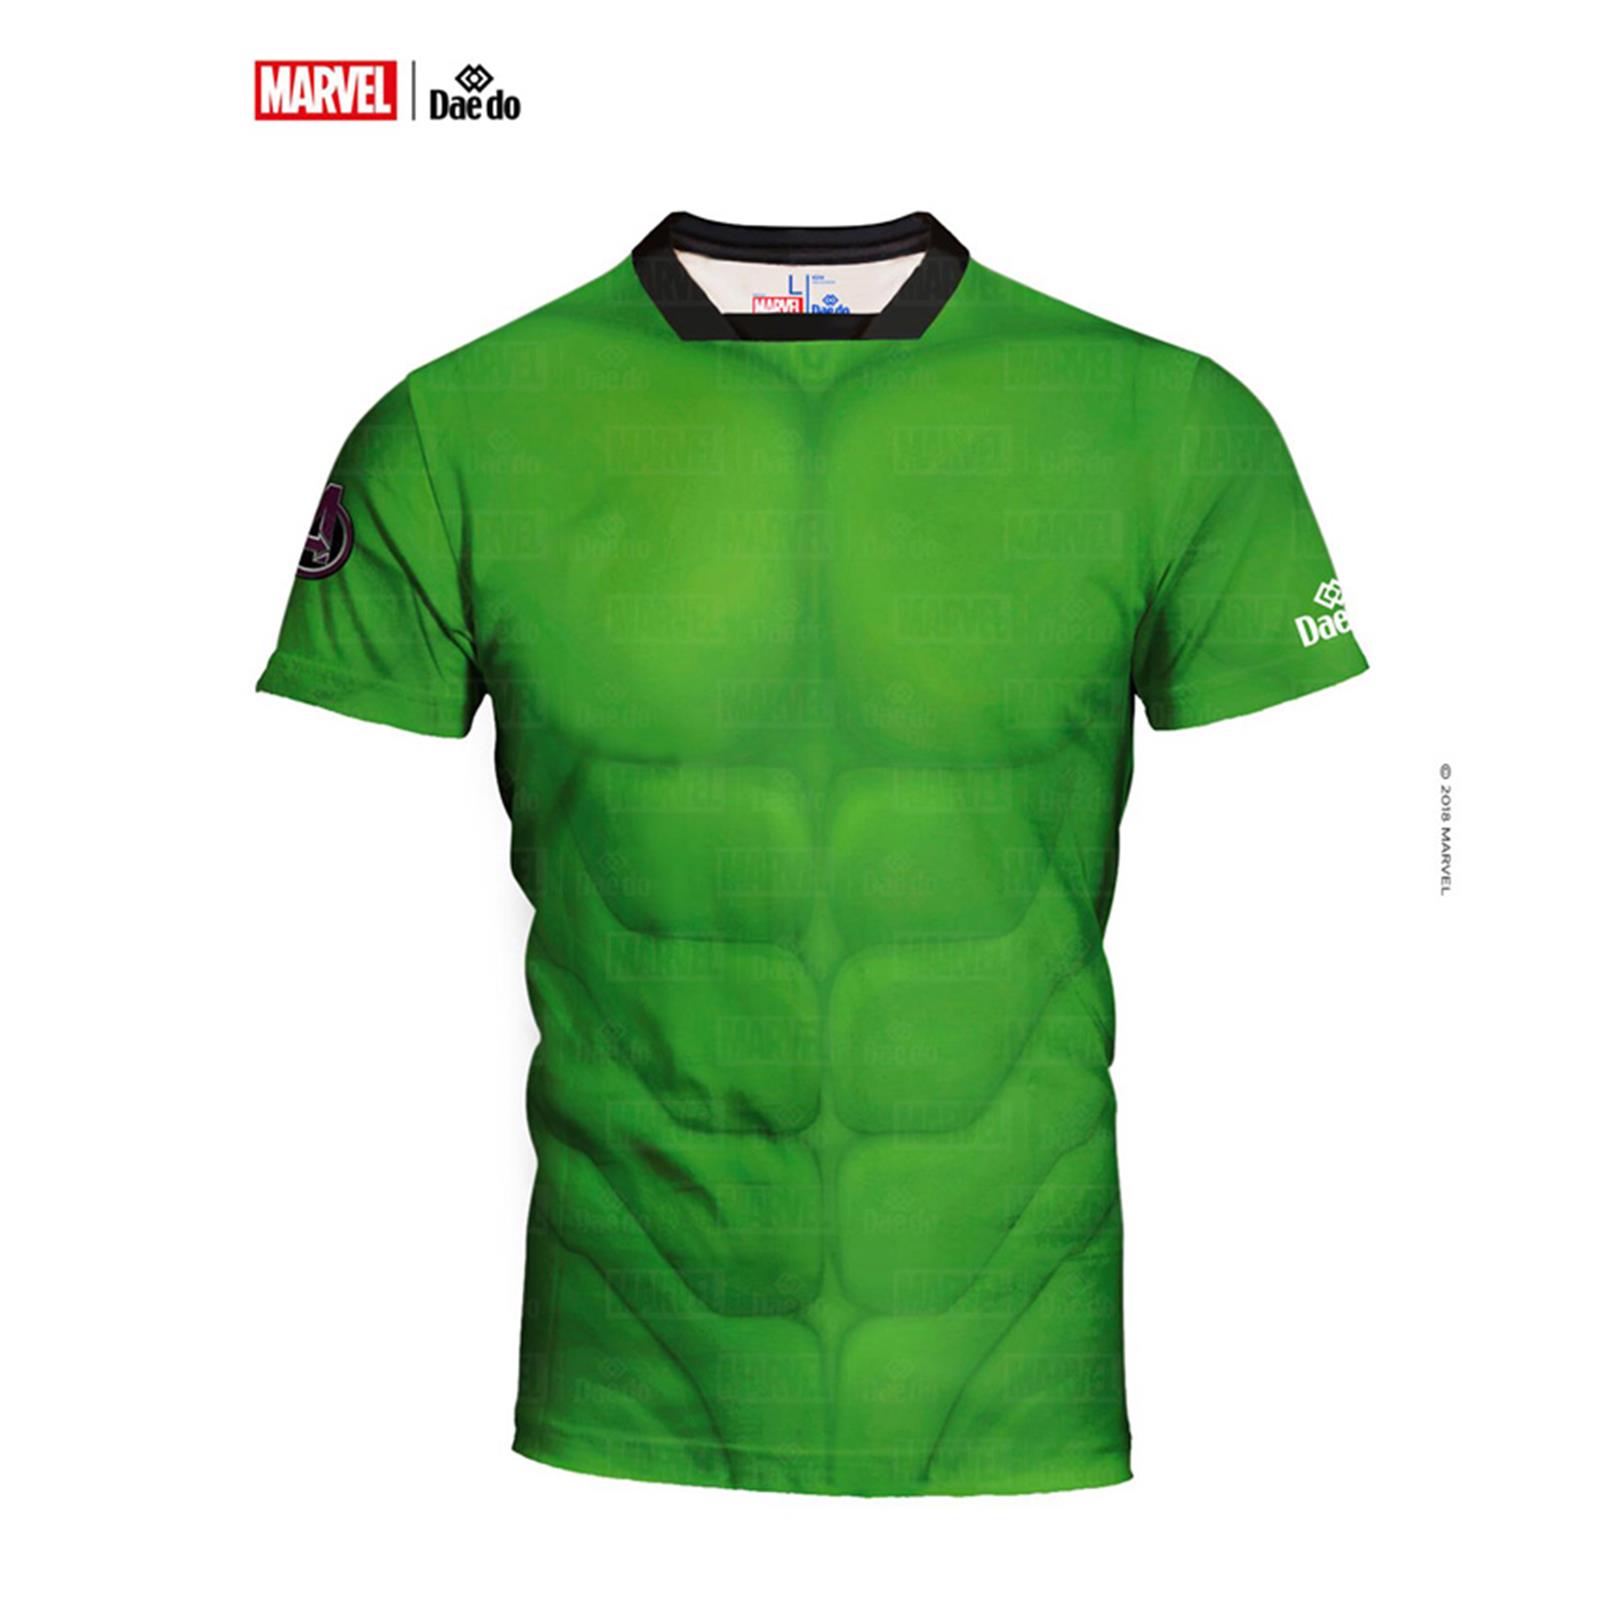 Dae Do Maglietta Hulk Full Print Slim Fit (S - VERDE)